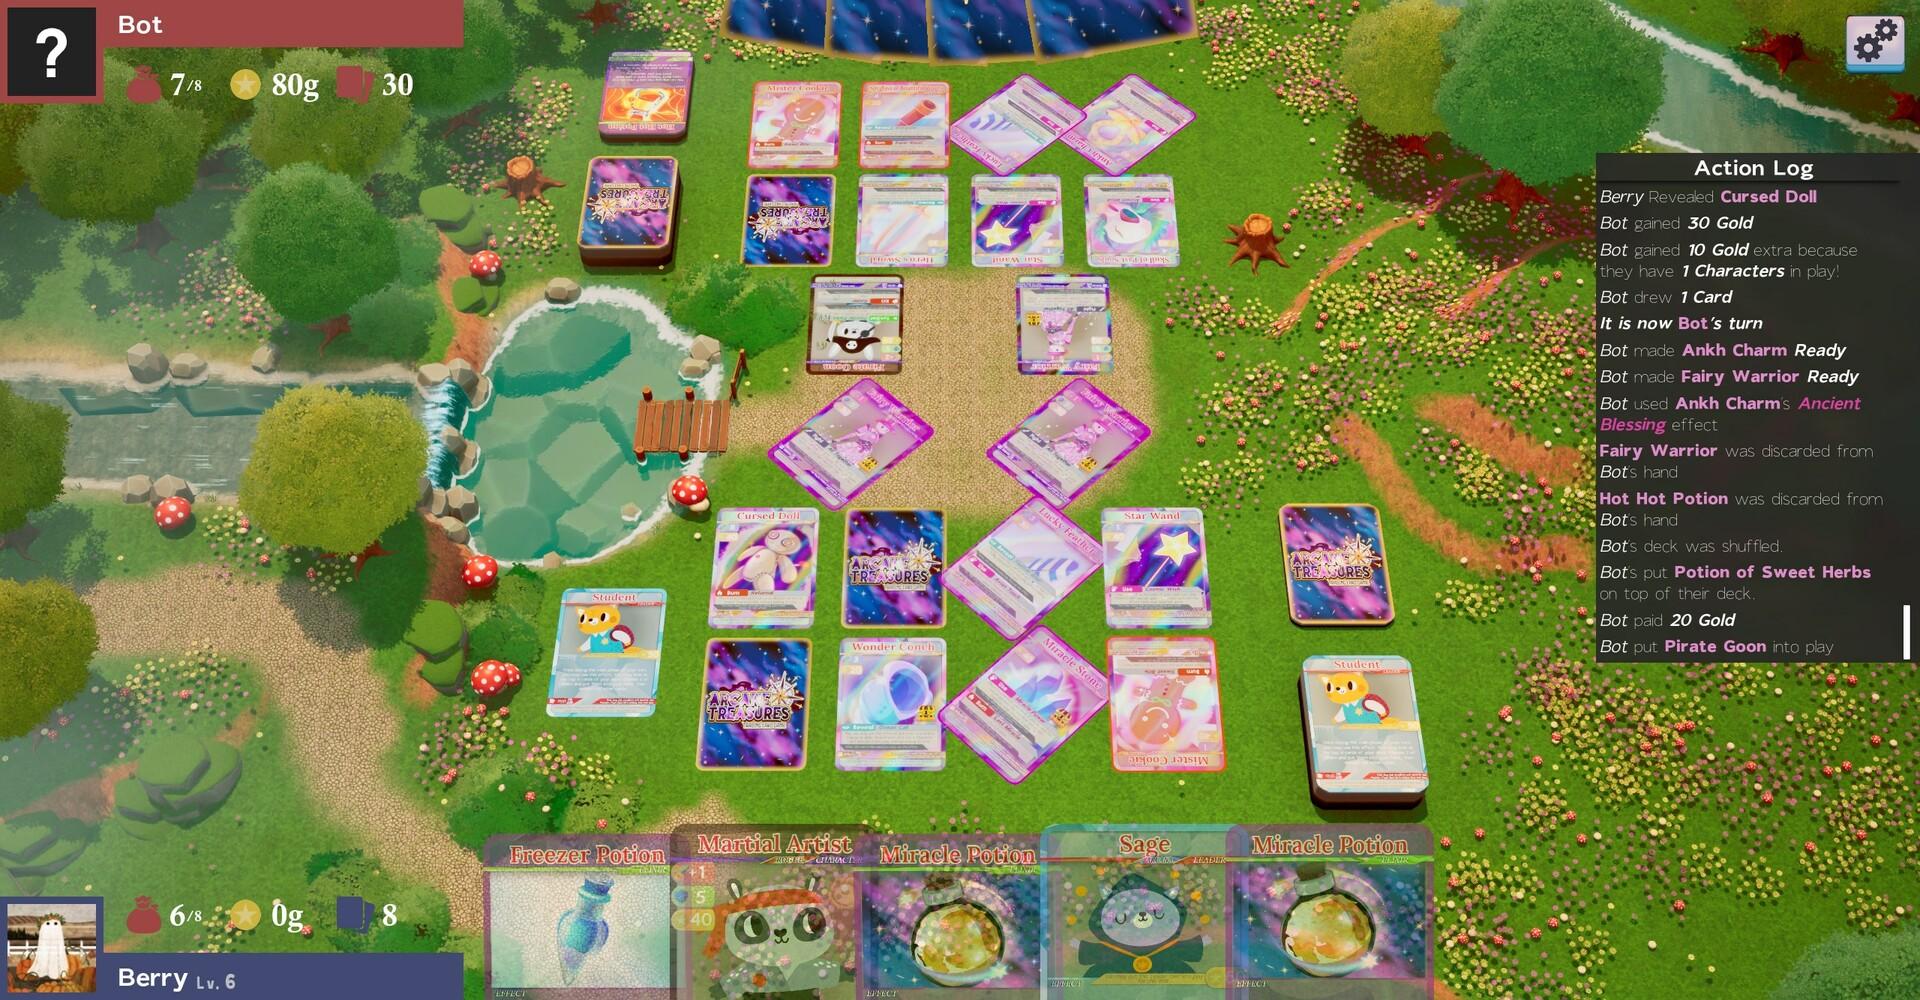 Arcane Treasures: Trading Card Game screenshot game